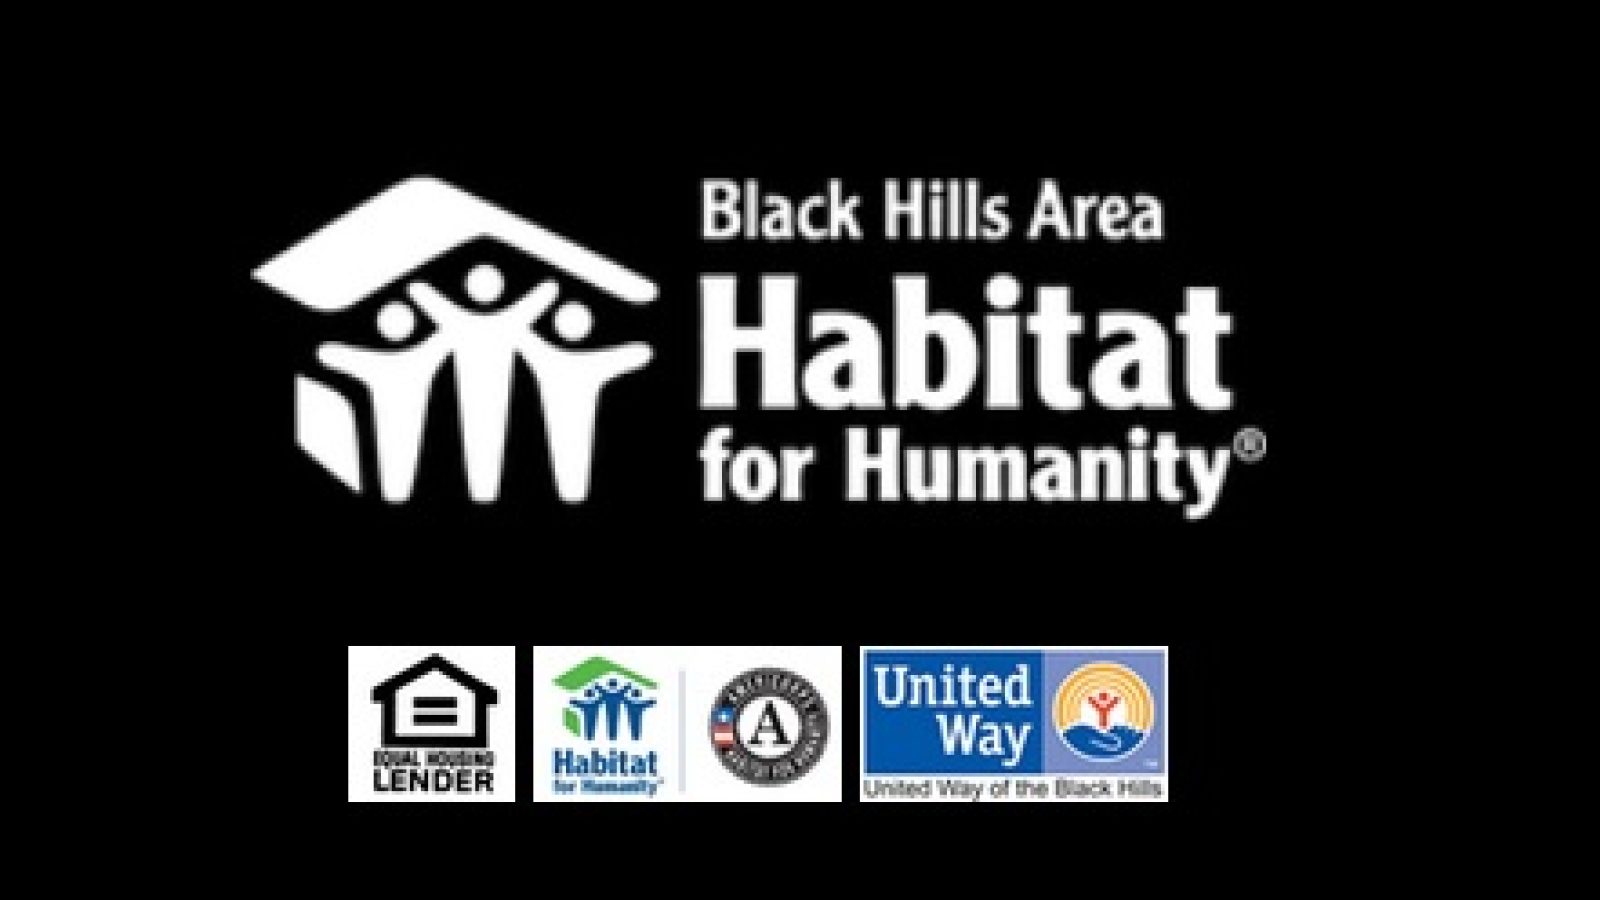 BH Habitat for Humanity